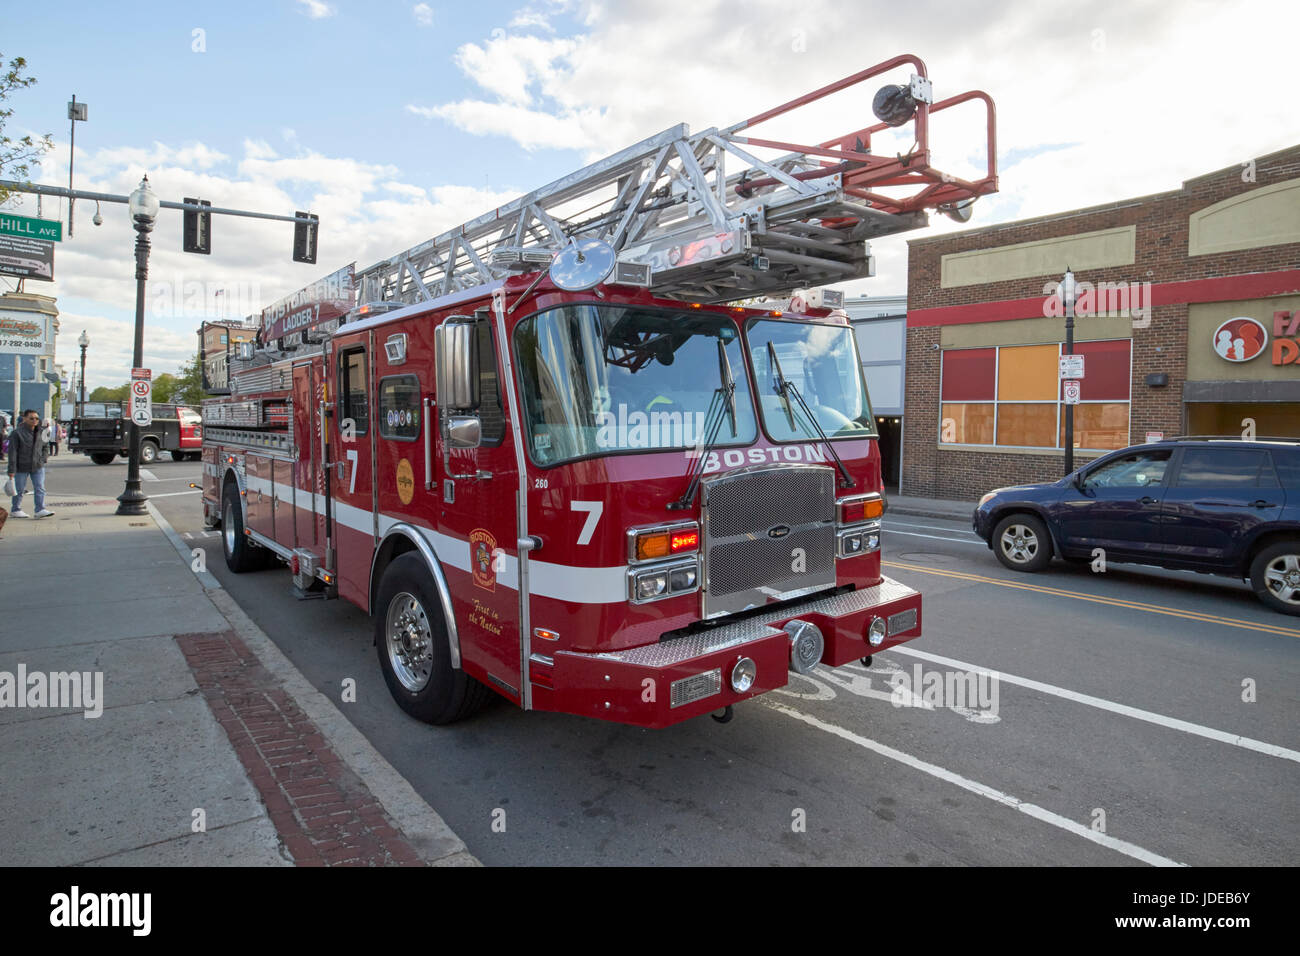 E-one Boston Feuerwehr Leiter 7 fire truck USA Stockfoto